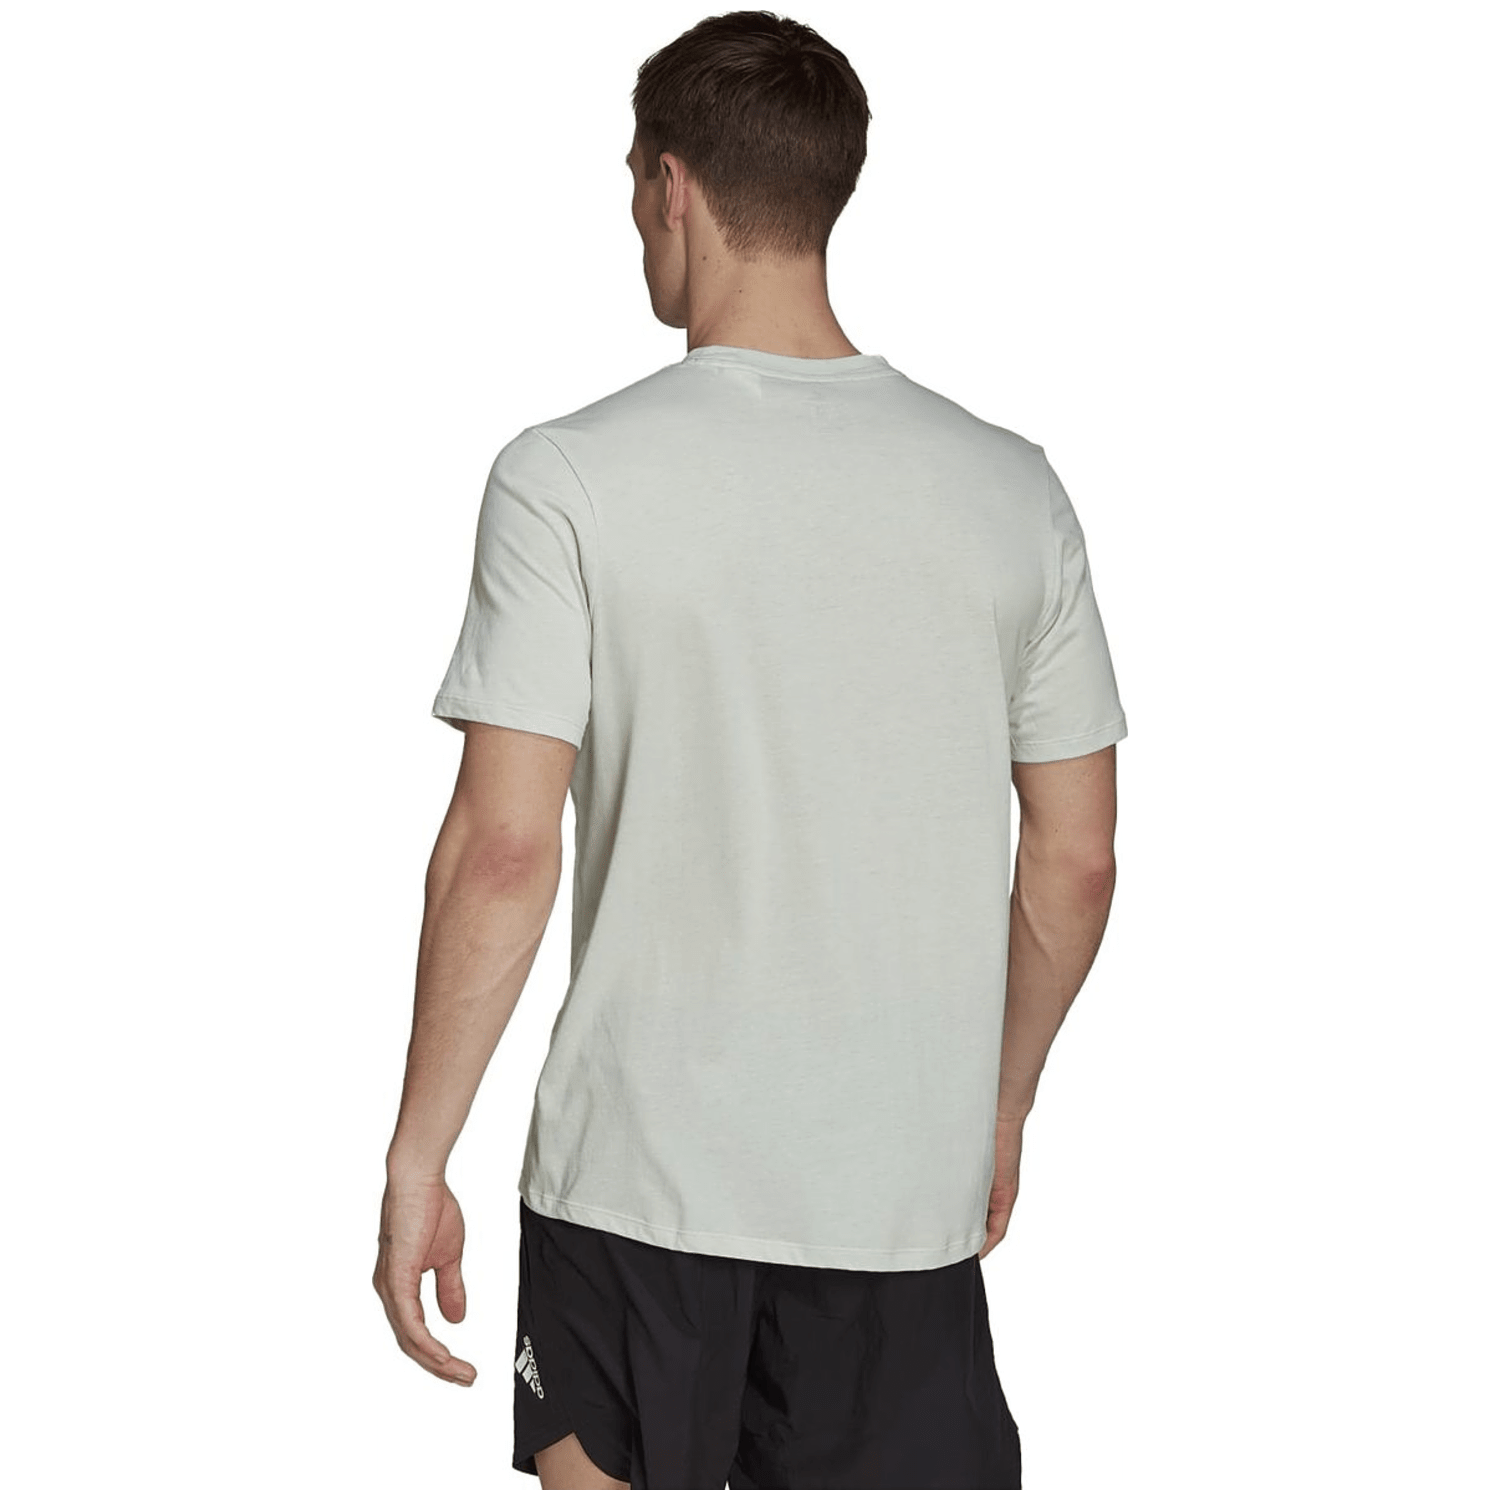 Adidas AEROREADY Designed 2 Move Sport T-Shirt Herren